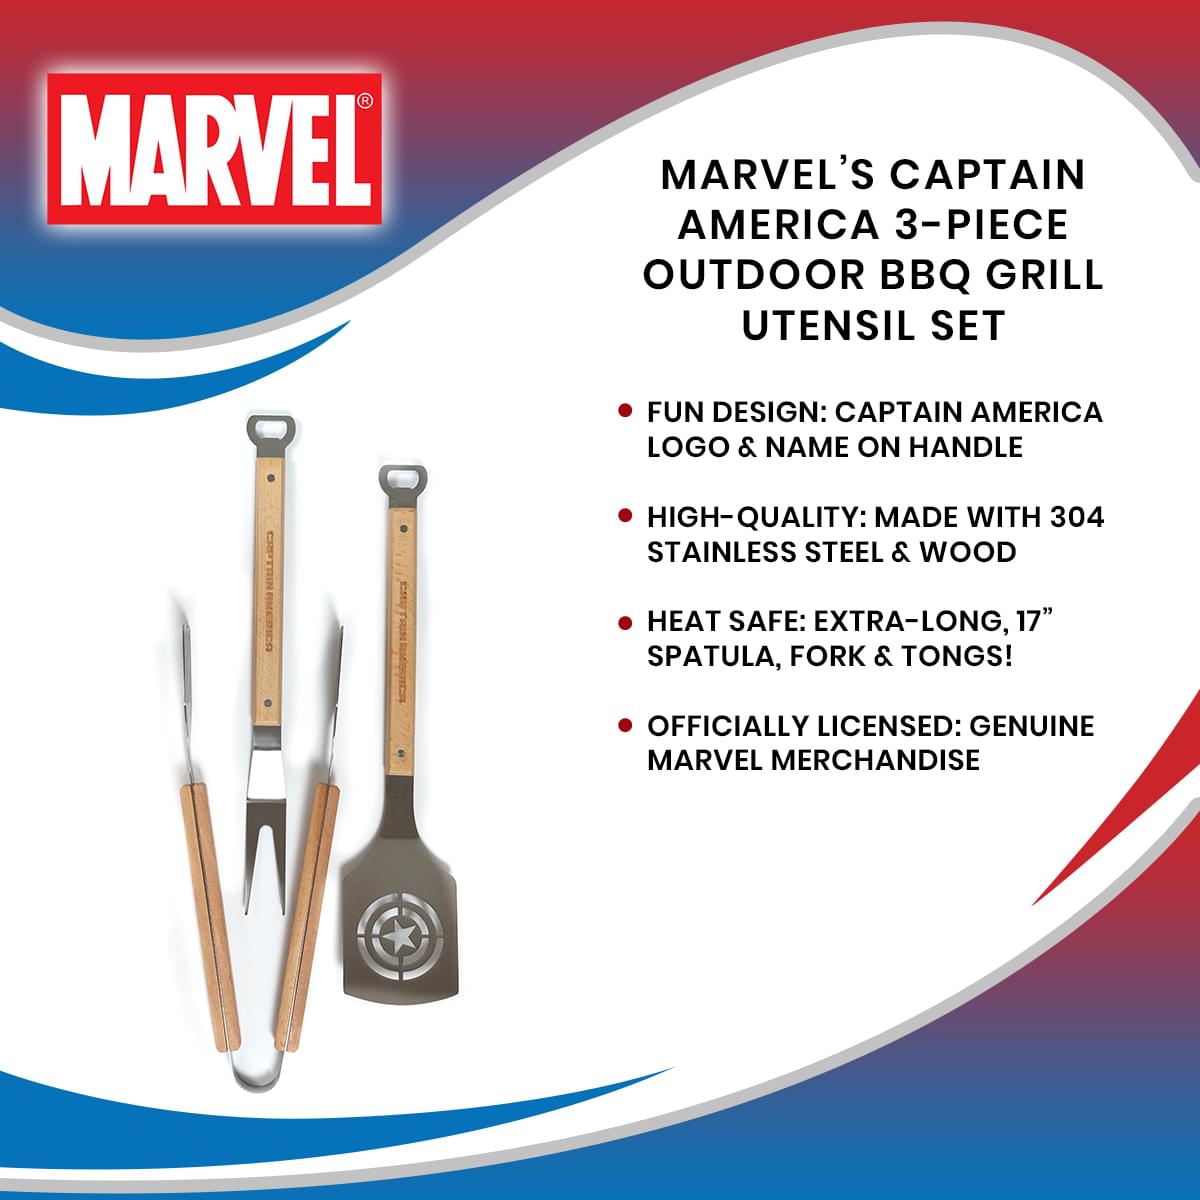 Marvel’s Captain America 3-Piece Outdoor BBQ Grill Utensil Set